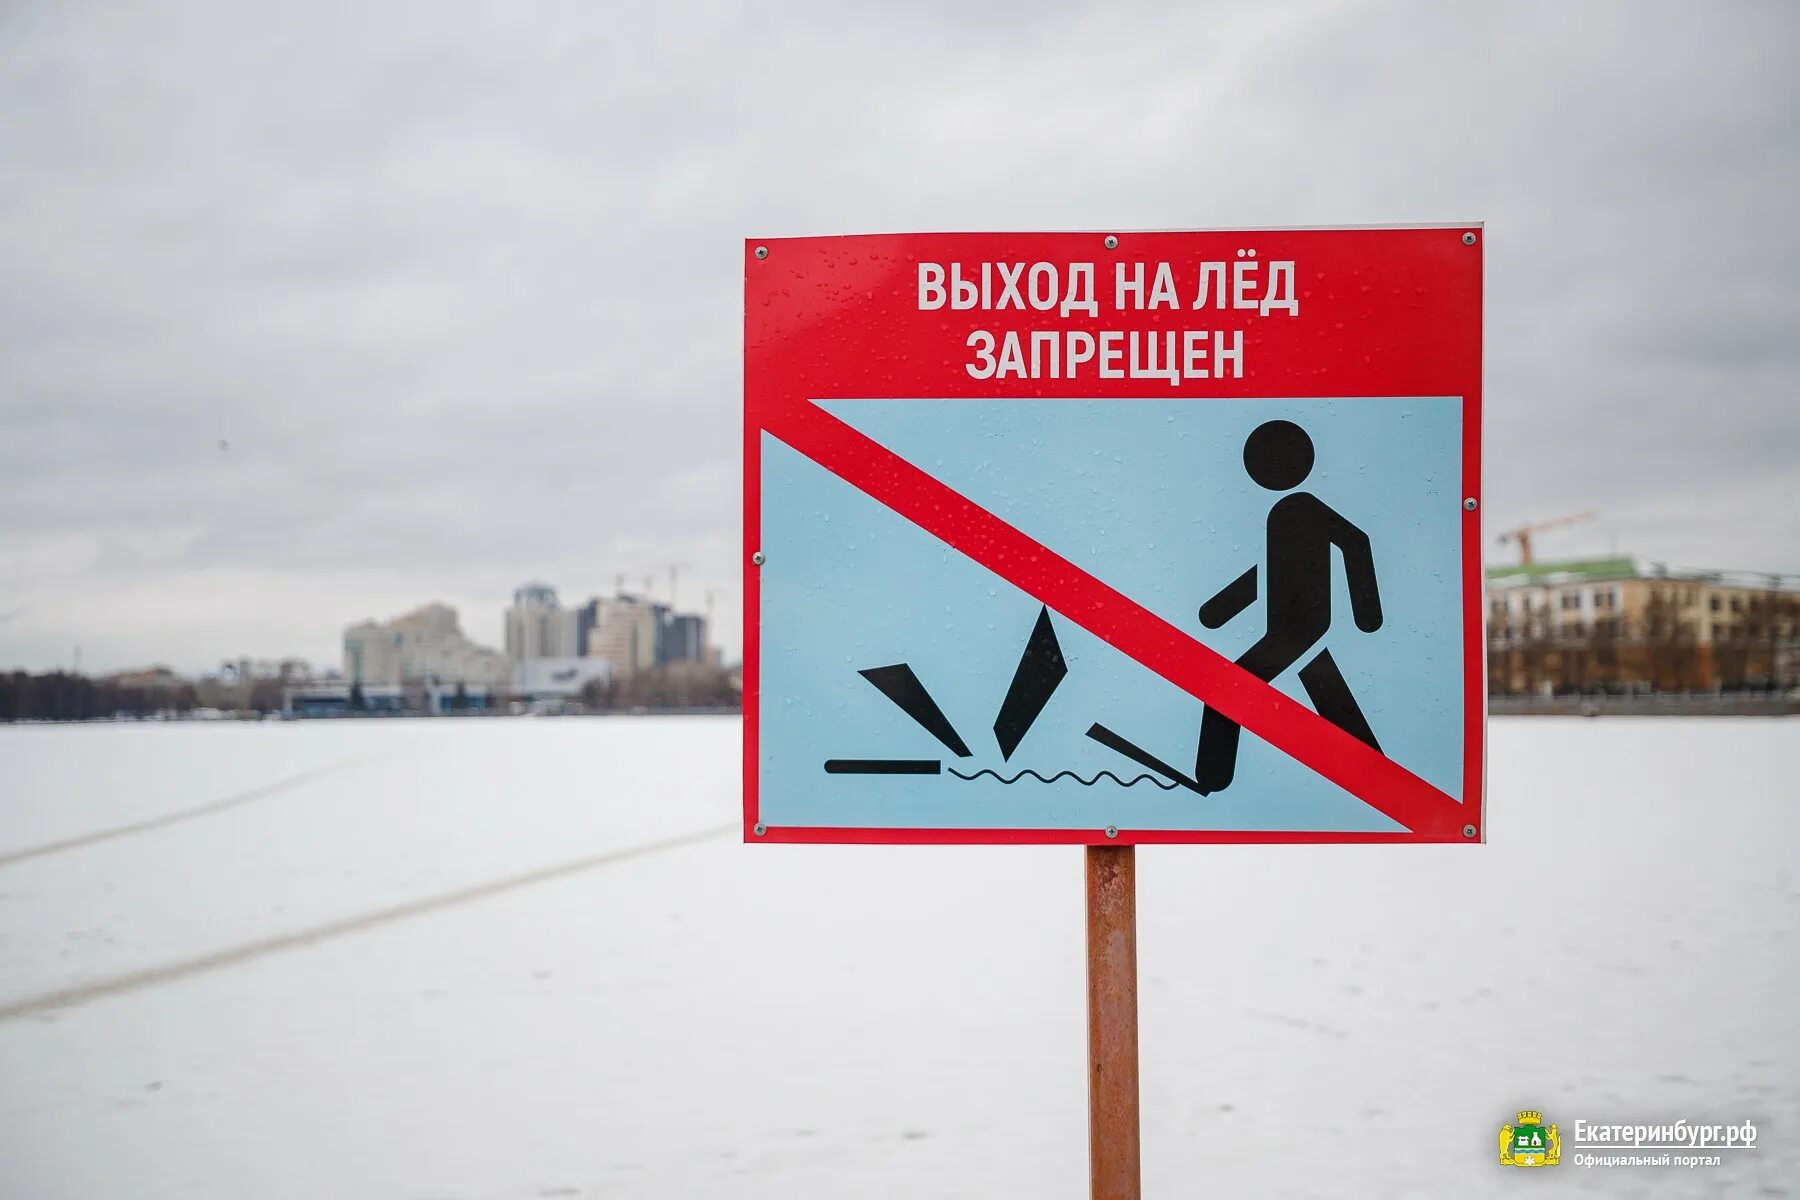 Выход на лед запрещен. Запрет выхода на лед. Запрещено выходить на лед. Выход на лед запрещен картинки.